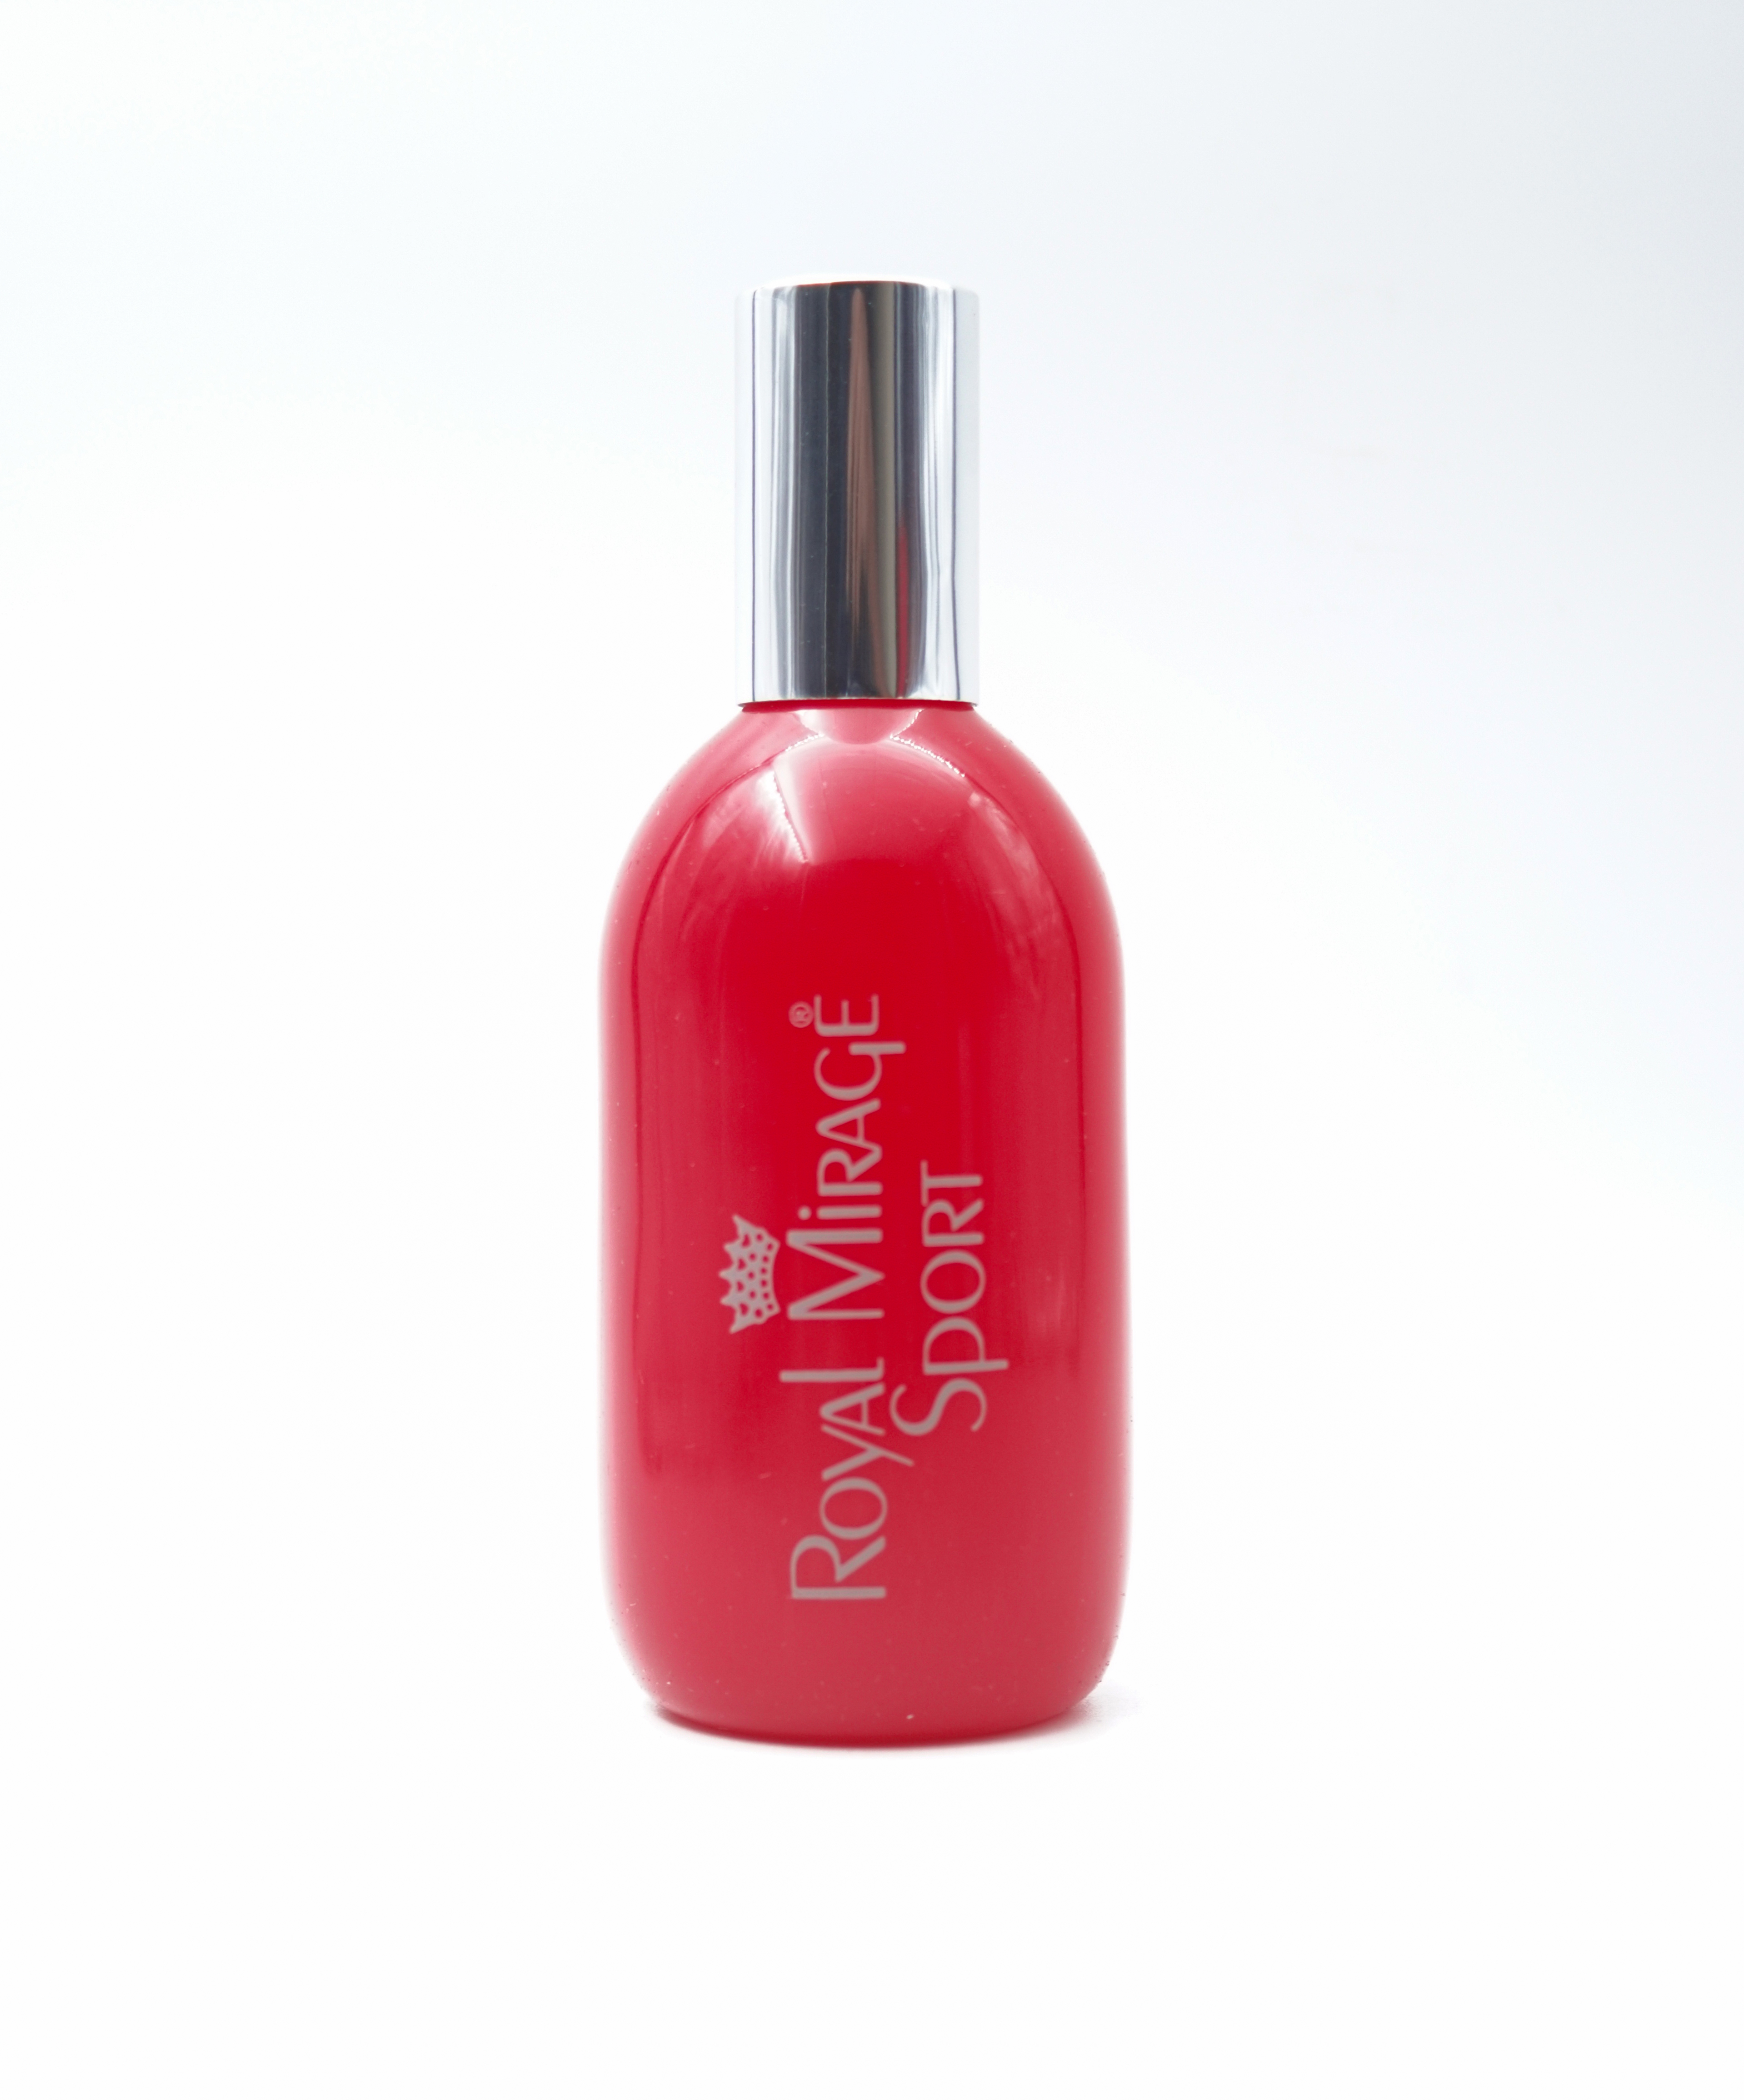 Royal Mirage Sport 120 ml Eau De Cologne Spray Perfume For Men SKU 96810